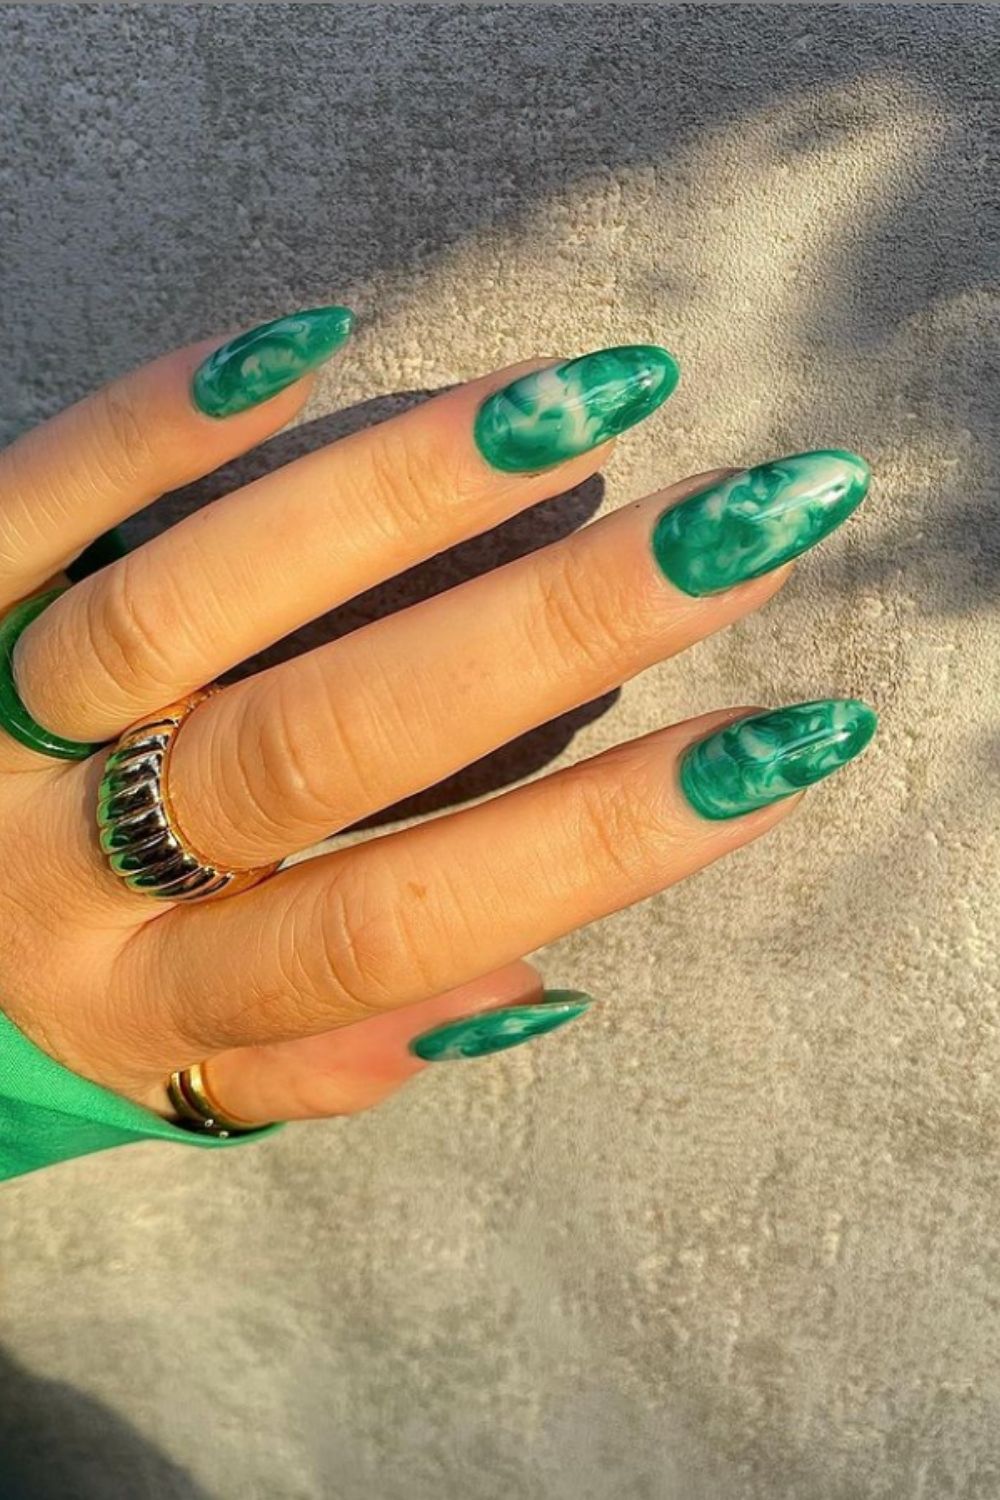 Green almond nails ideas